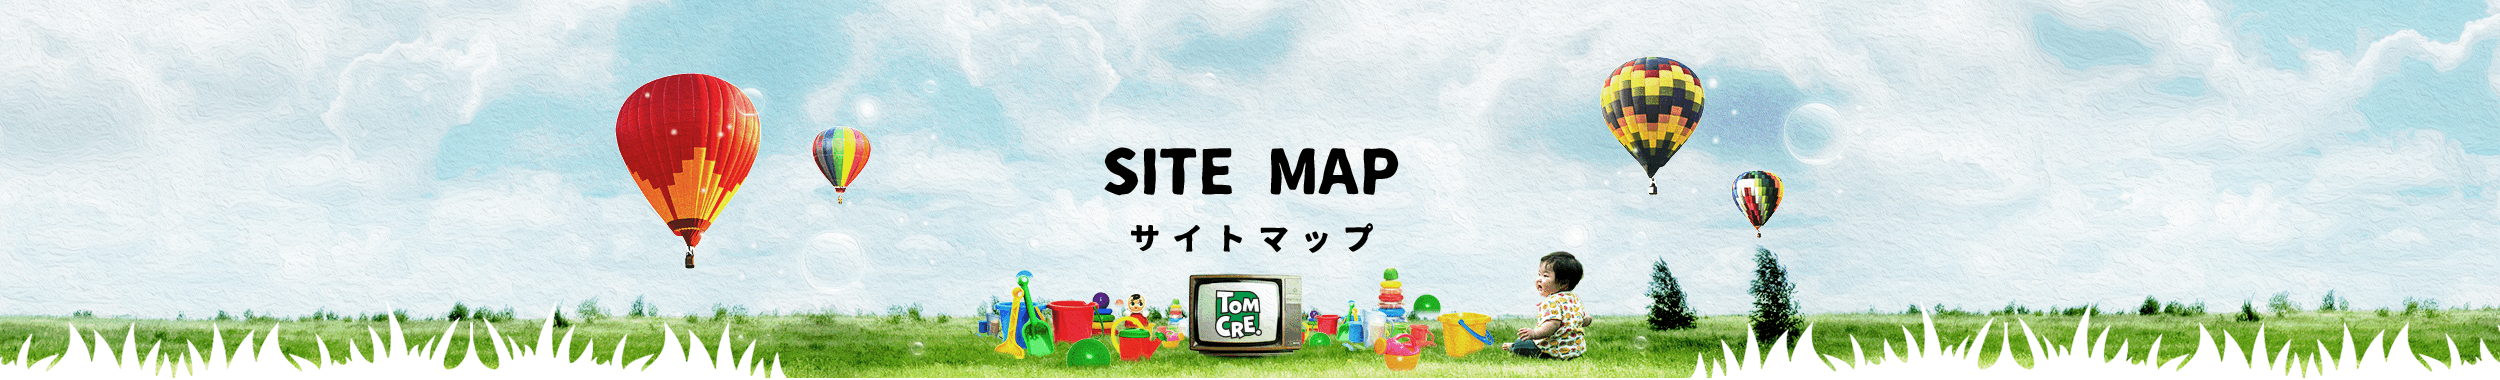 SITE MAP　サイトマップ